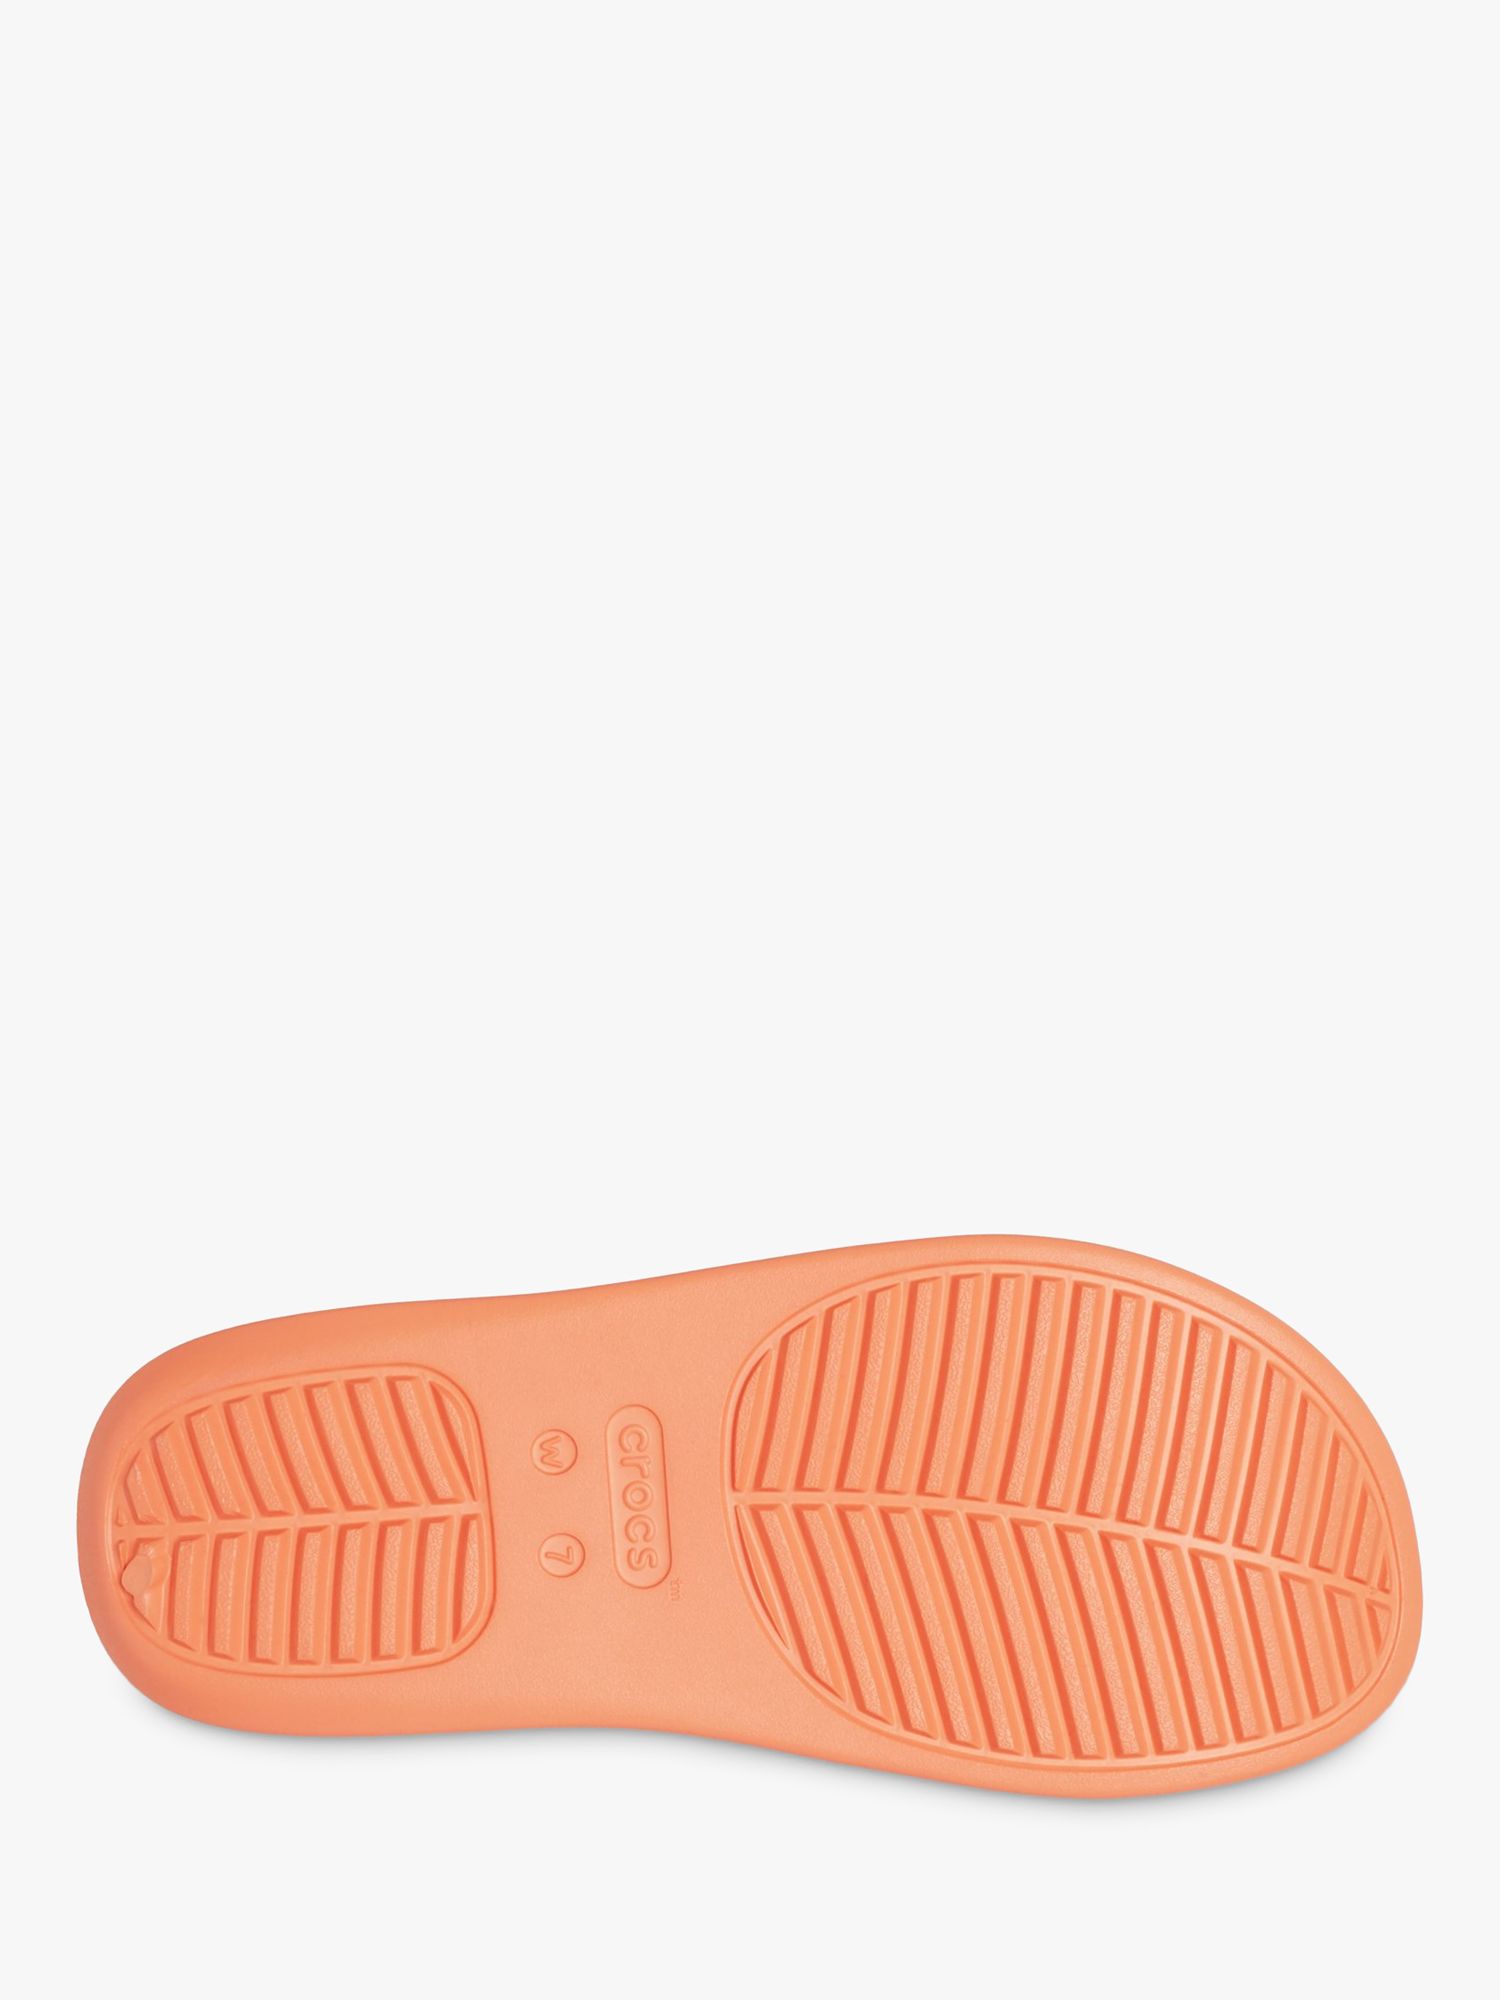 Crocs Getaway Platform Flip Flops, Light Peach, 4